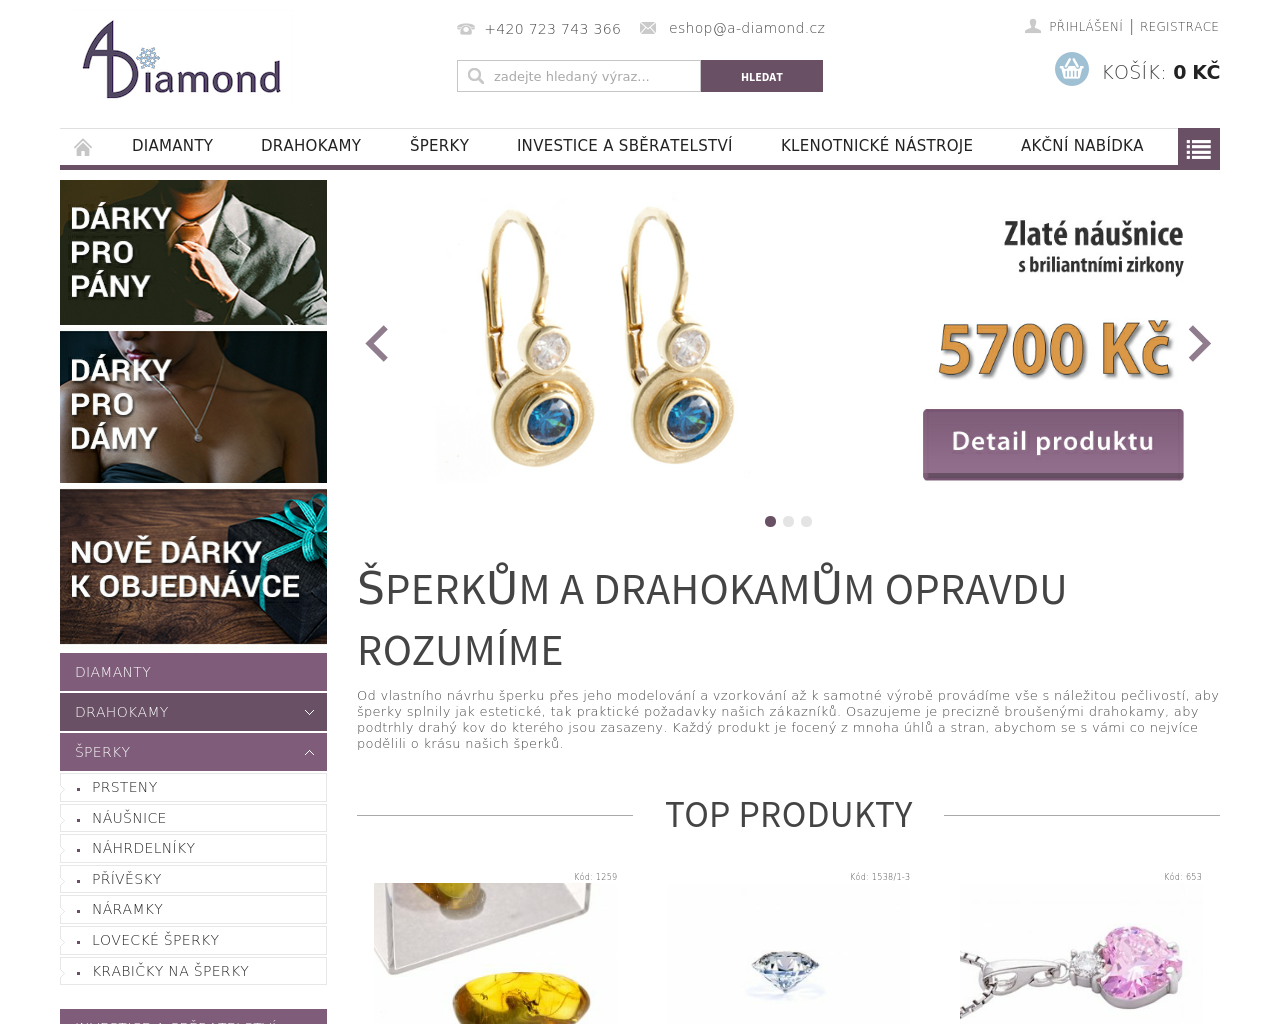 Site Image a-diamond.cz v 1280x1024